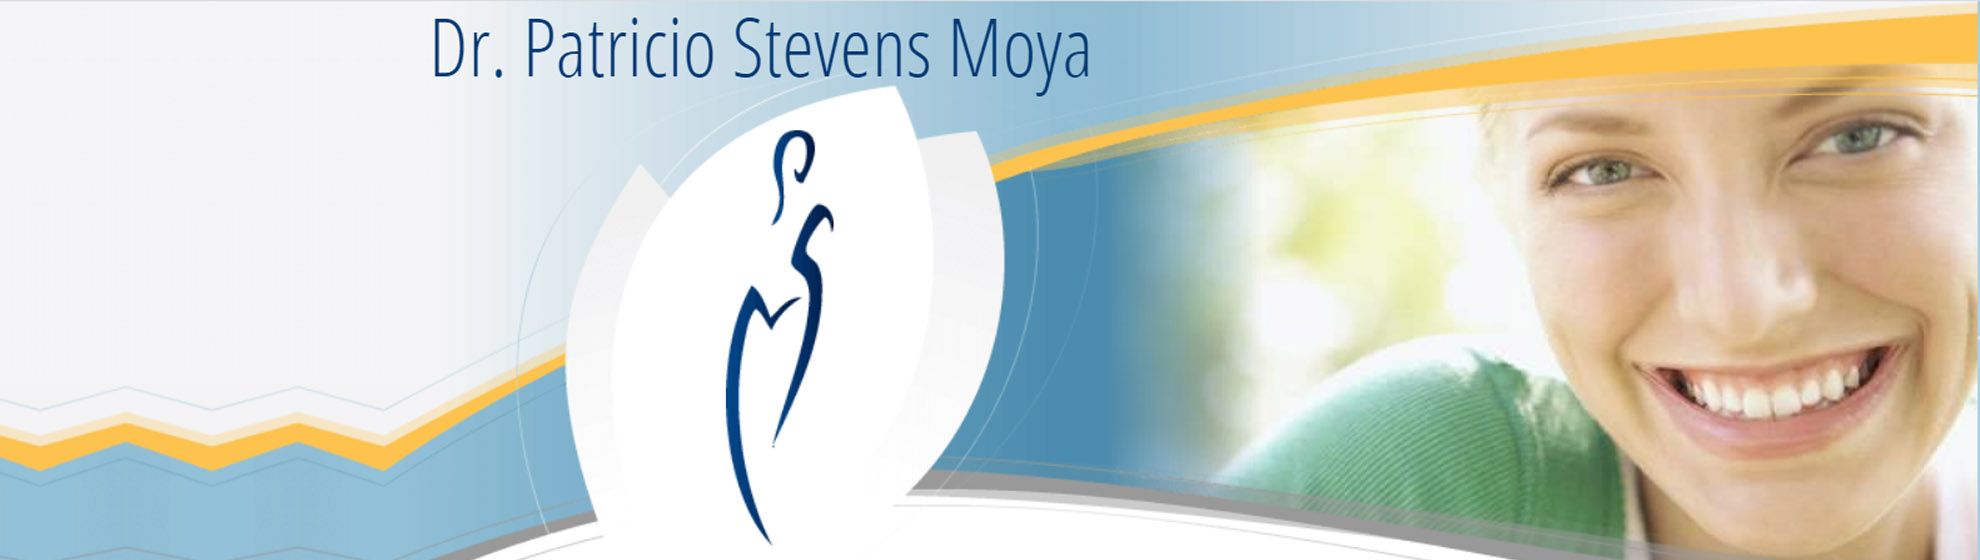 Doctor Patricio Stevens Moya